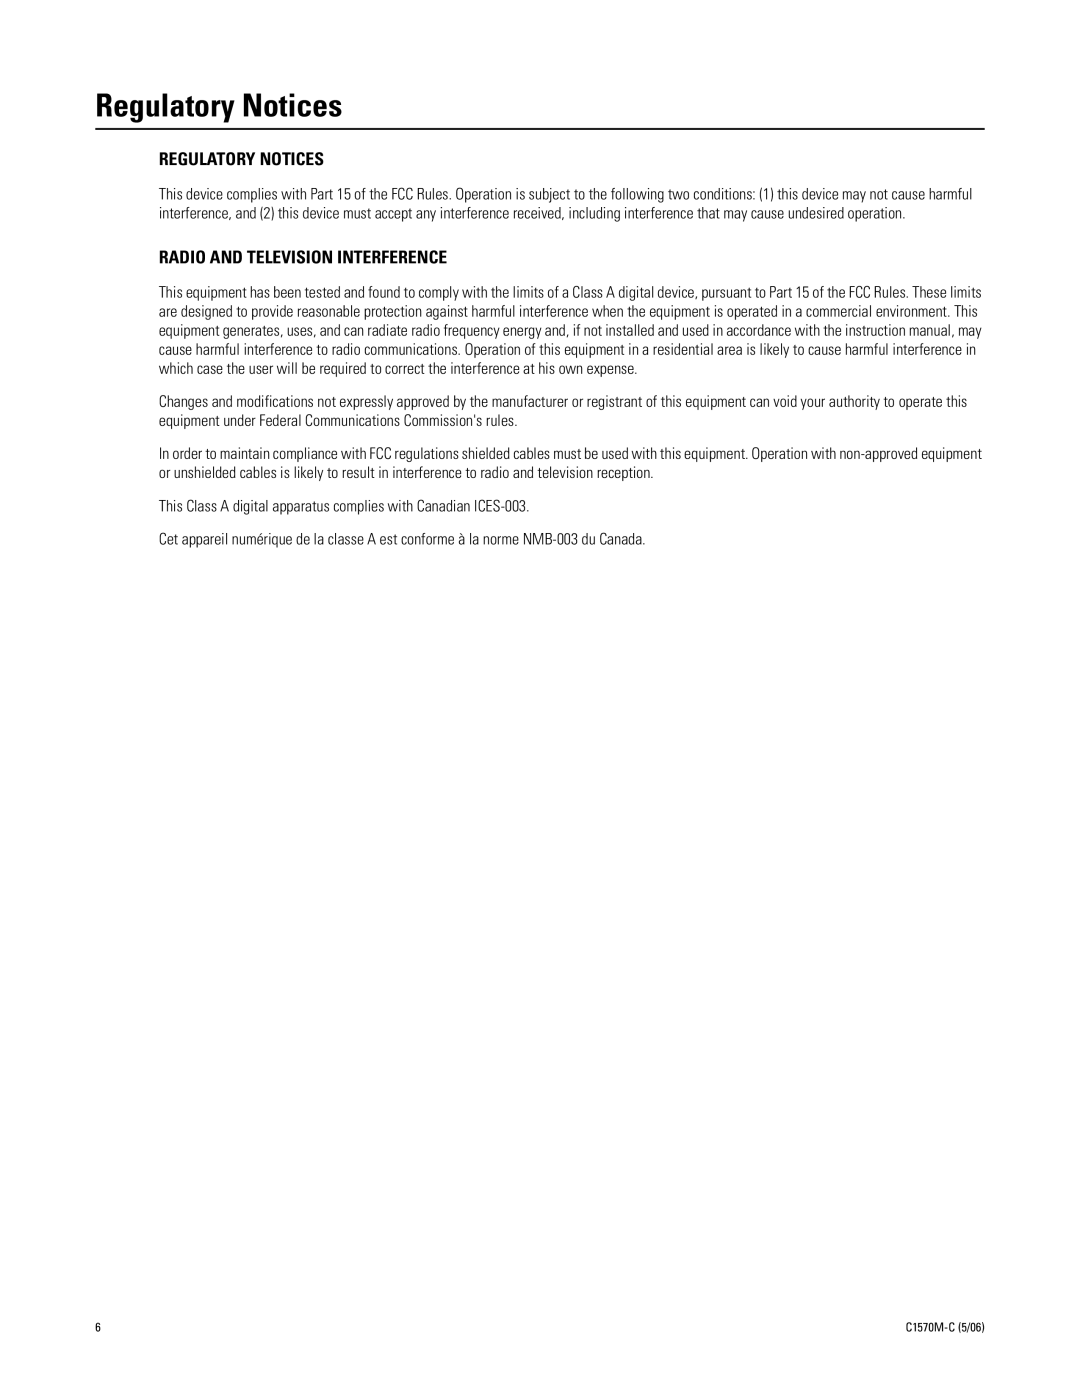 Pelco CM9700MDD-EVS manual Regulatory Notices 